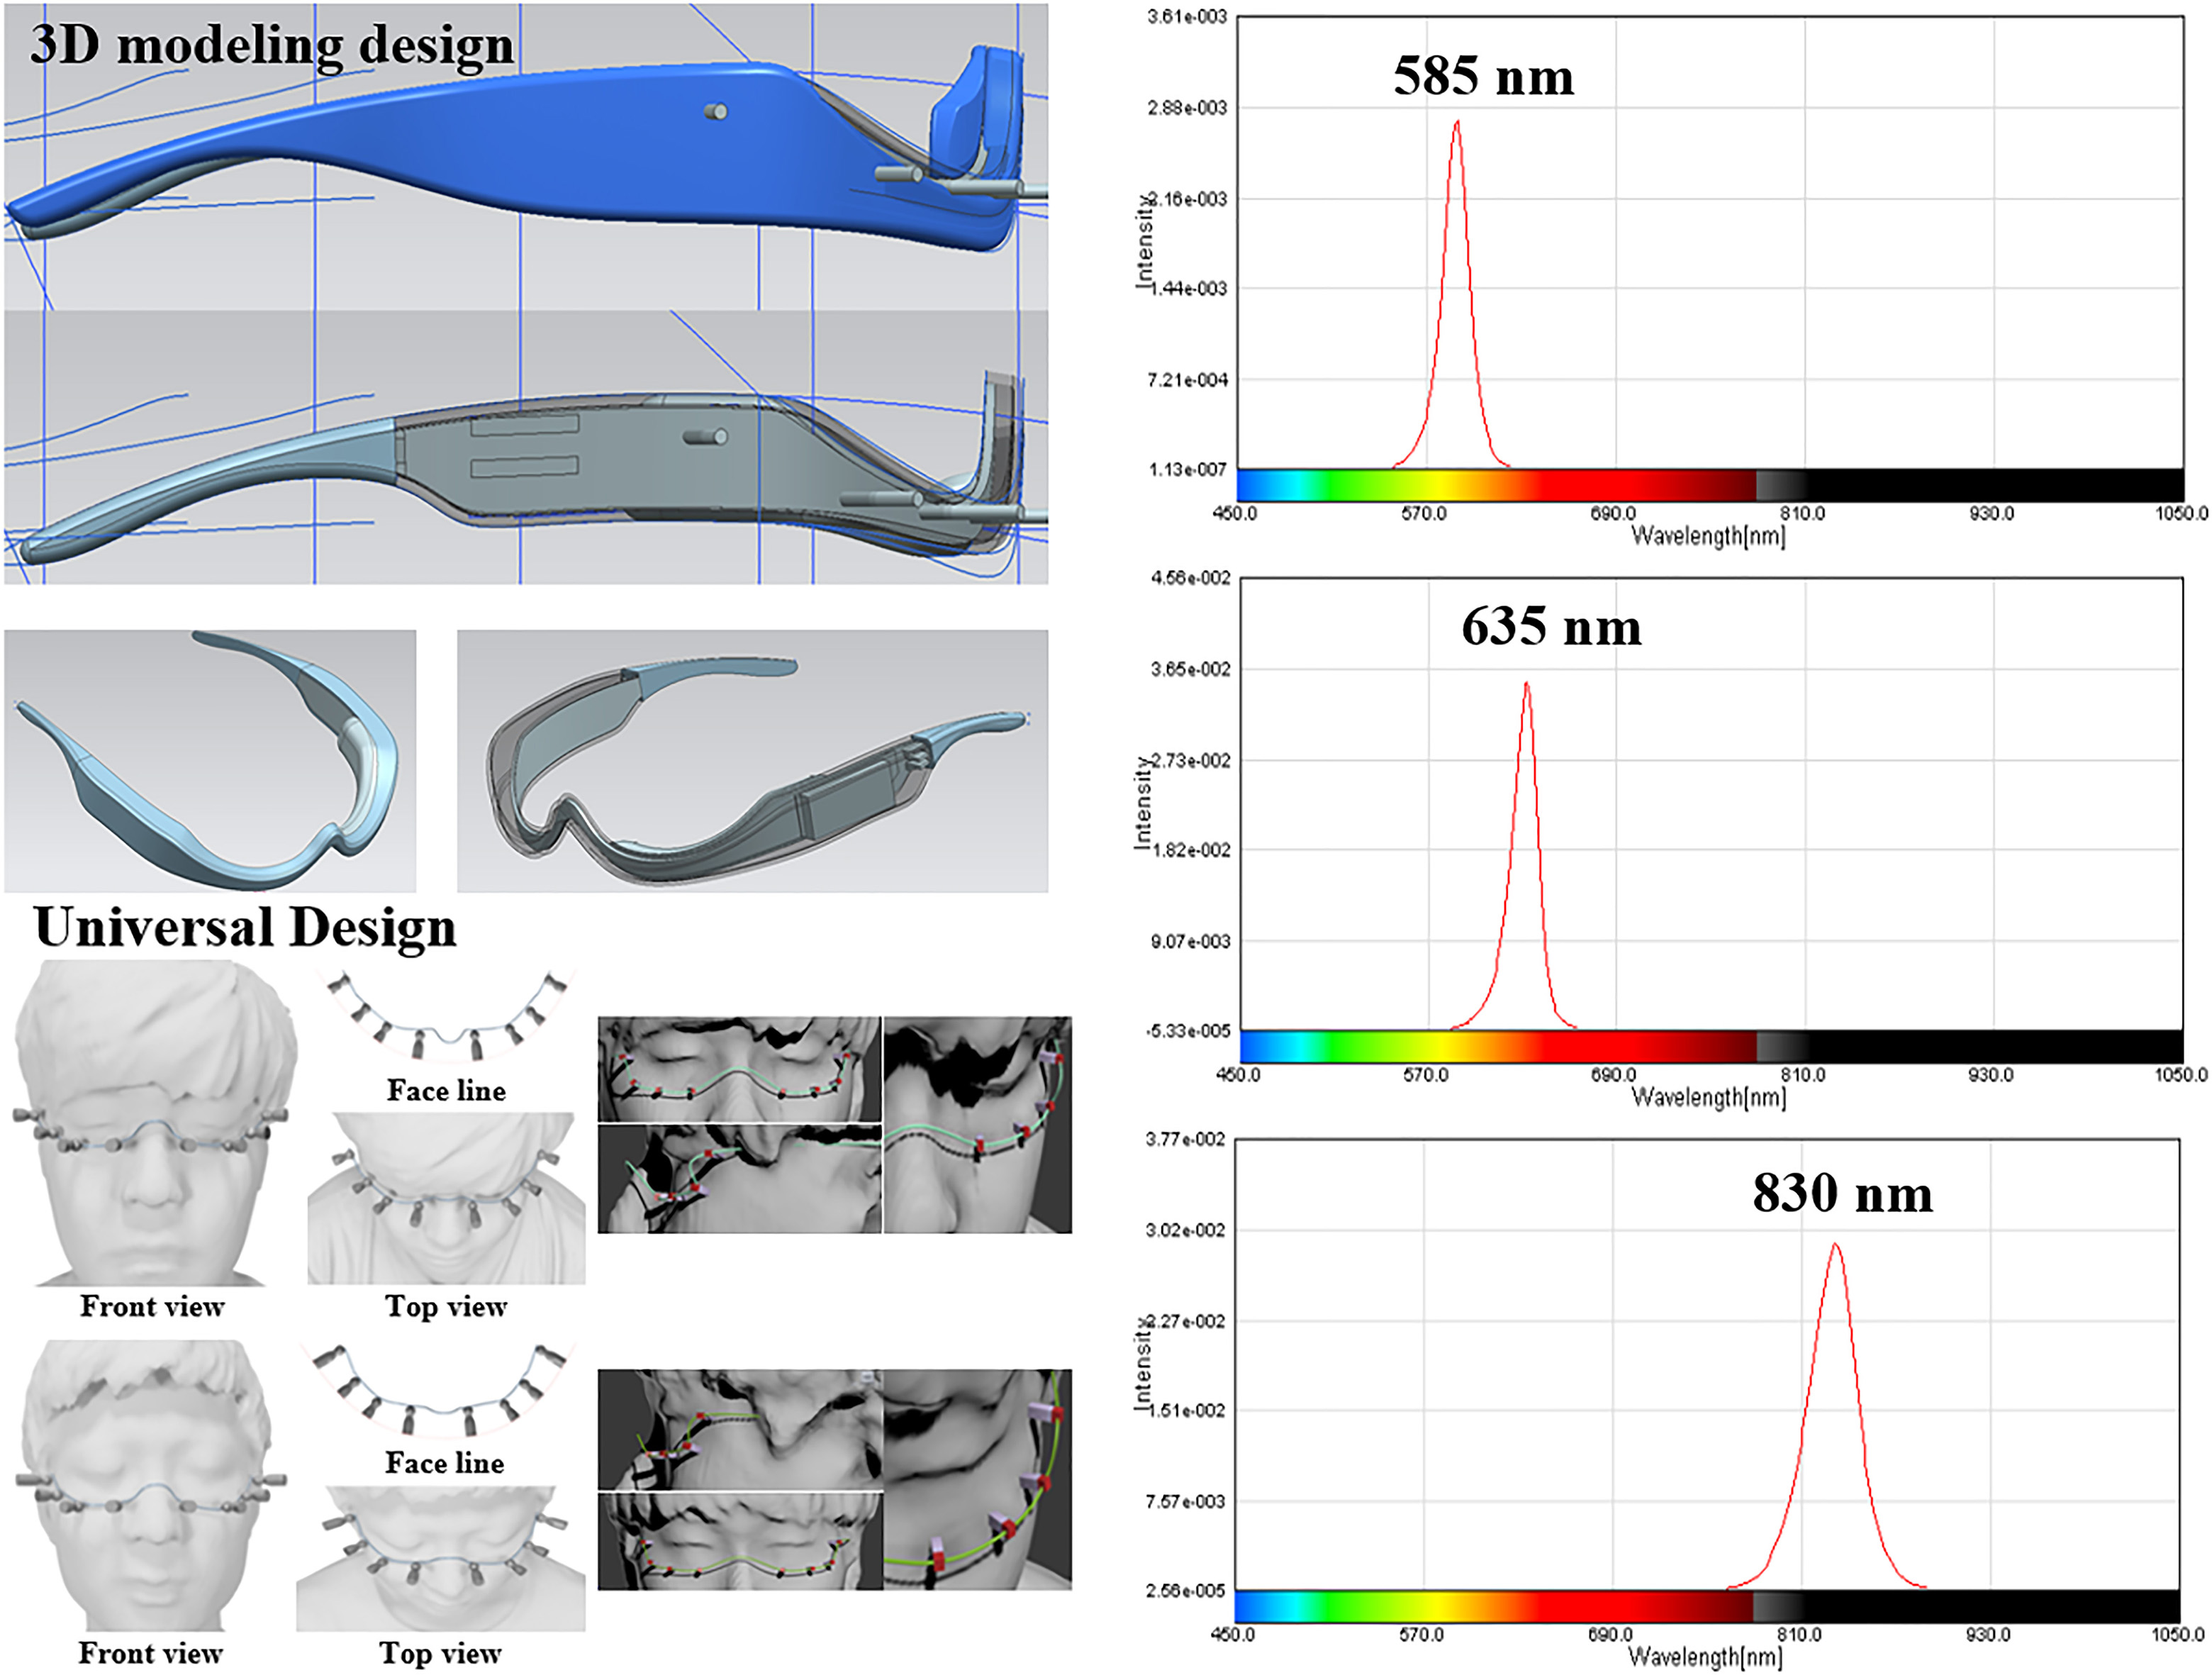 Mechanical 3D design, prototype, and LED wavelength performance test.